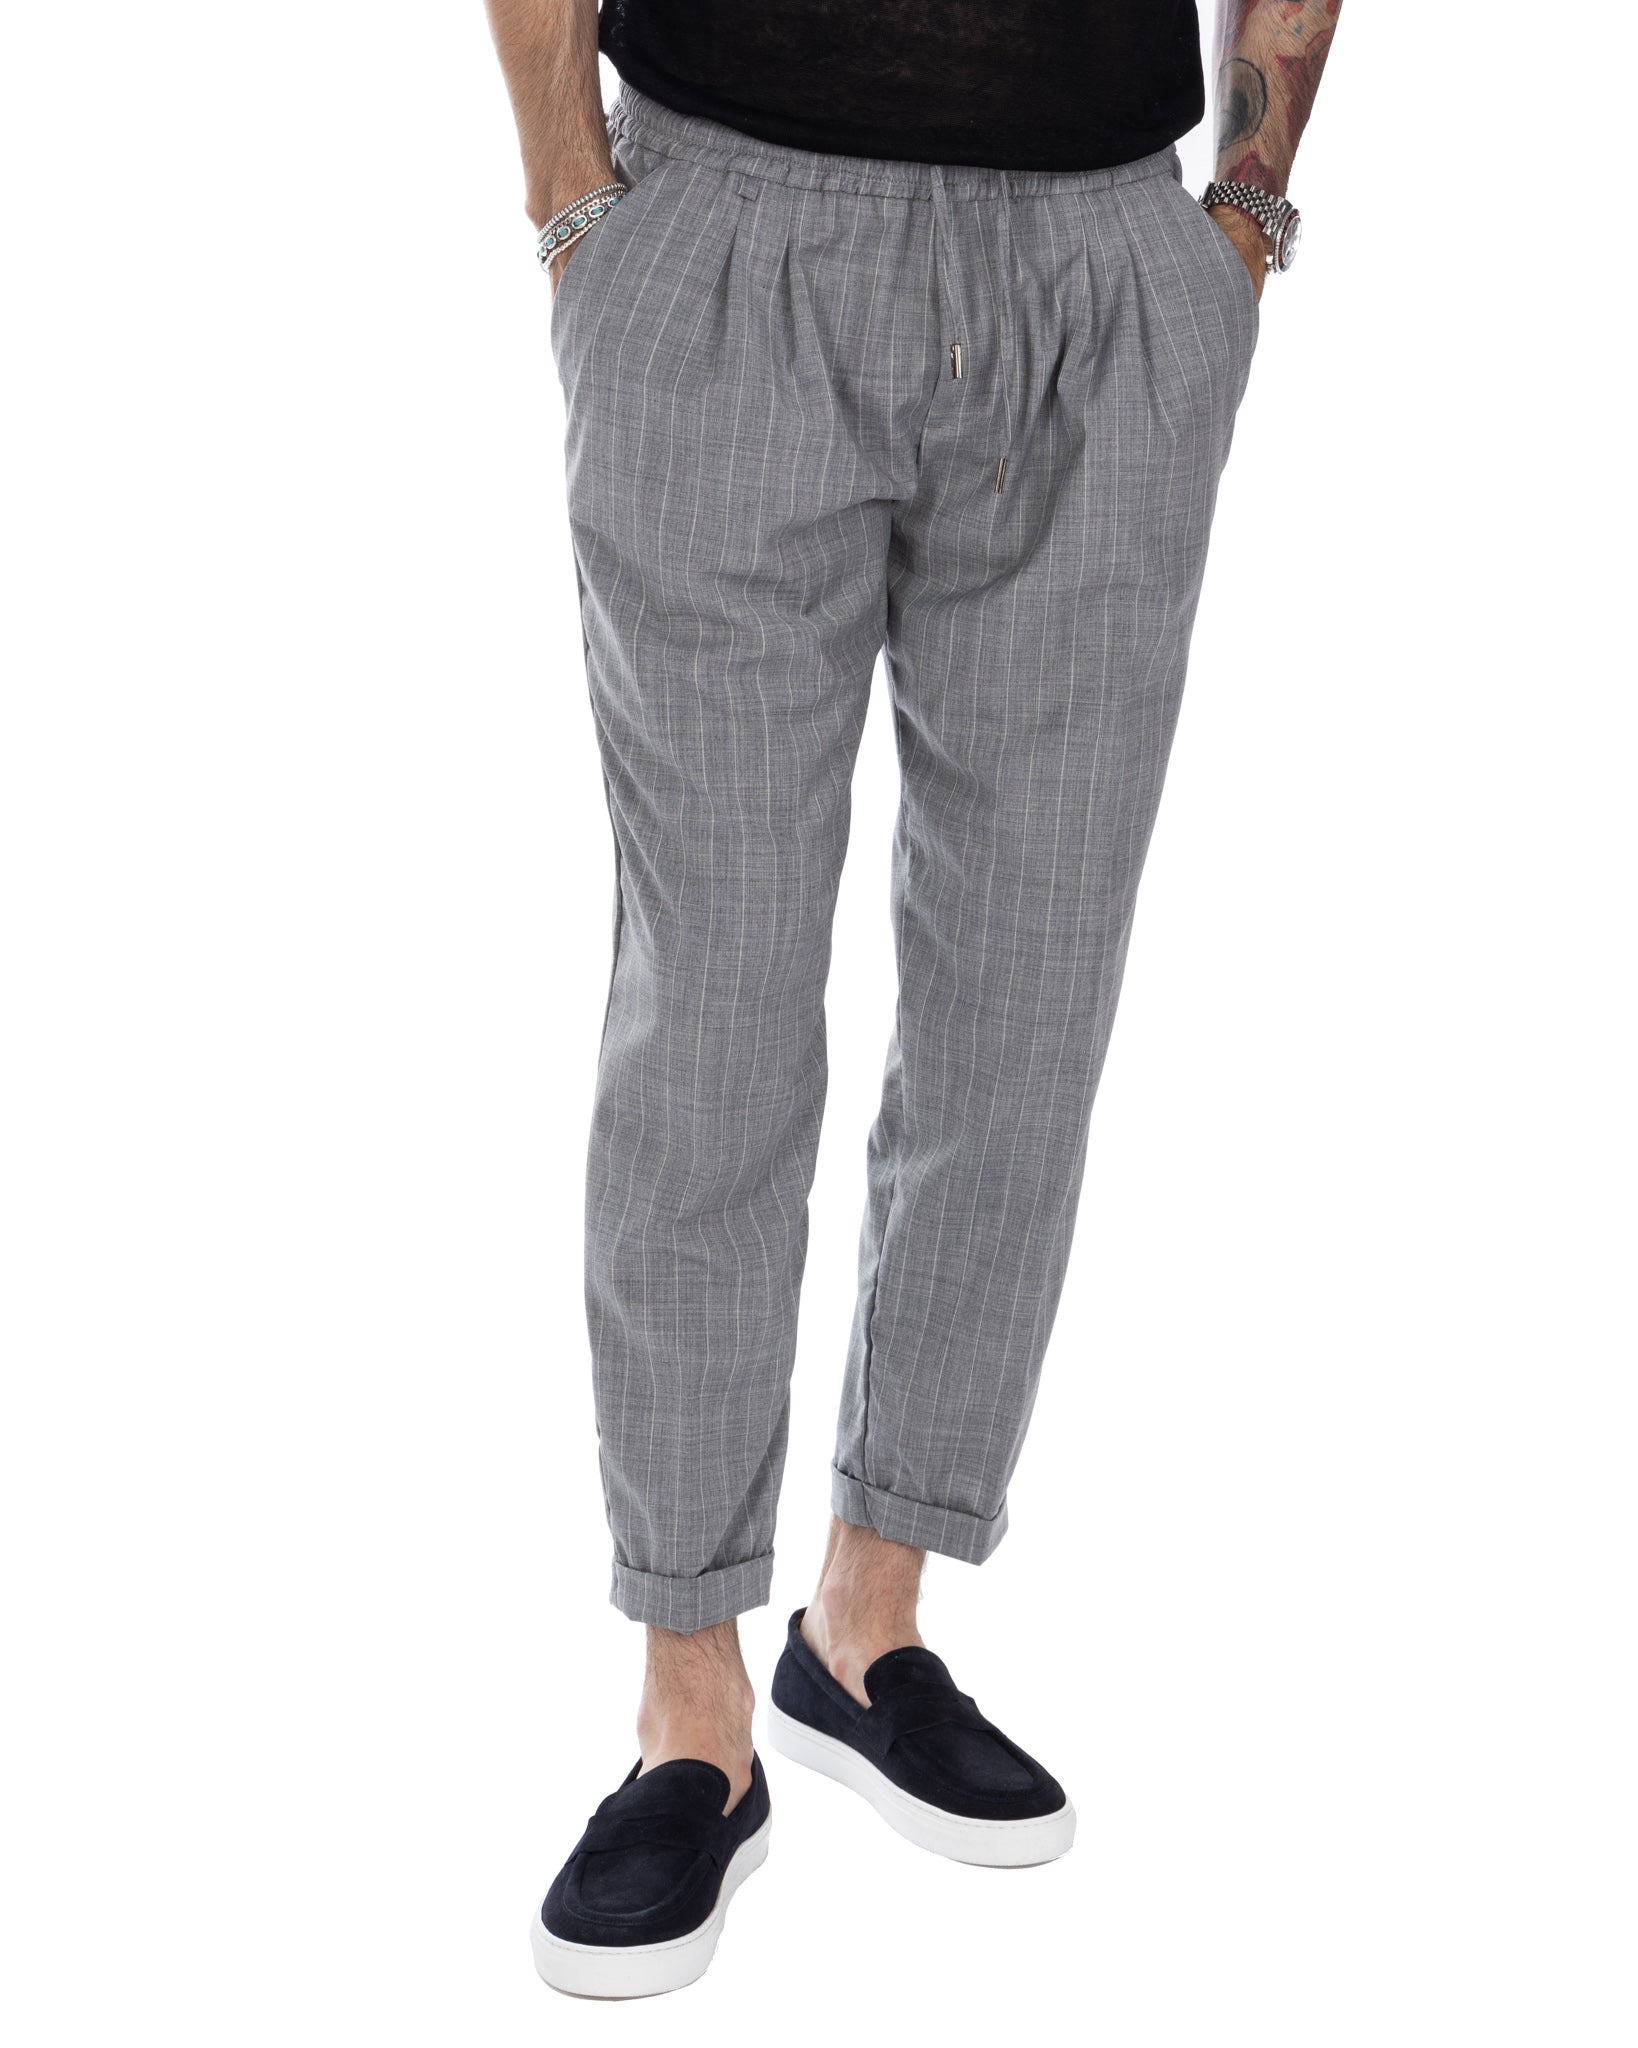 Elijah - gray pinstripe trousers in wool blend